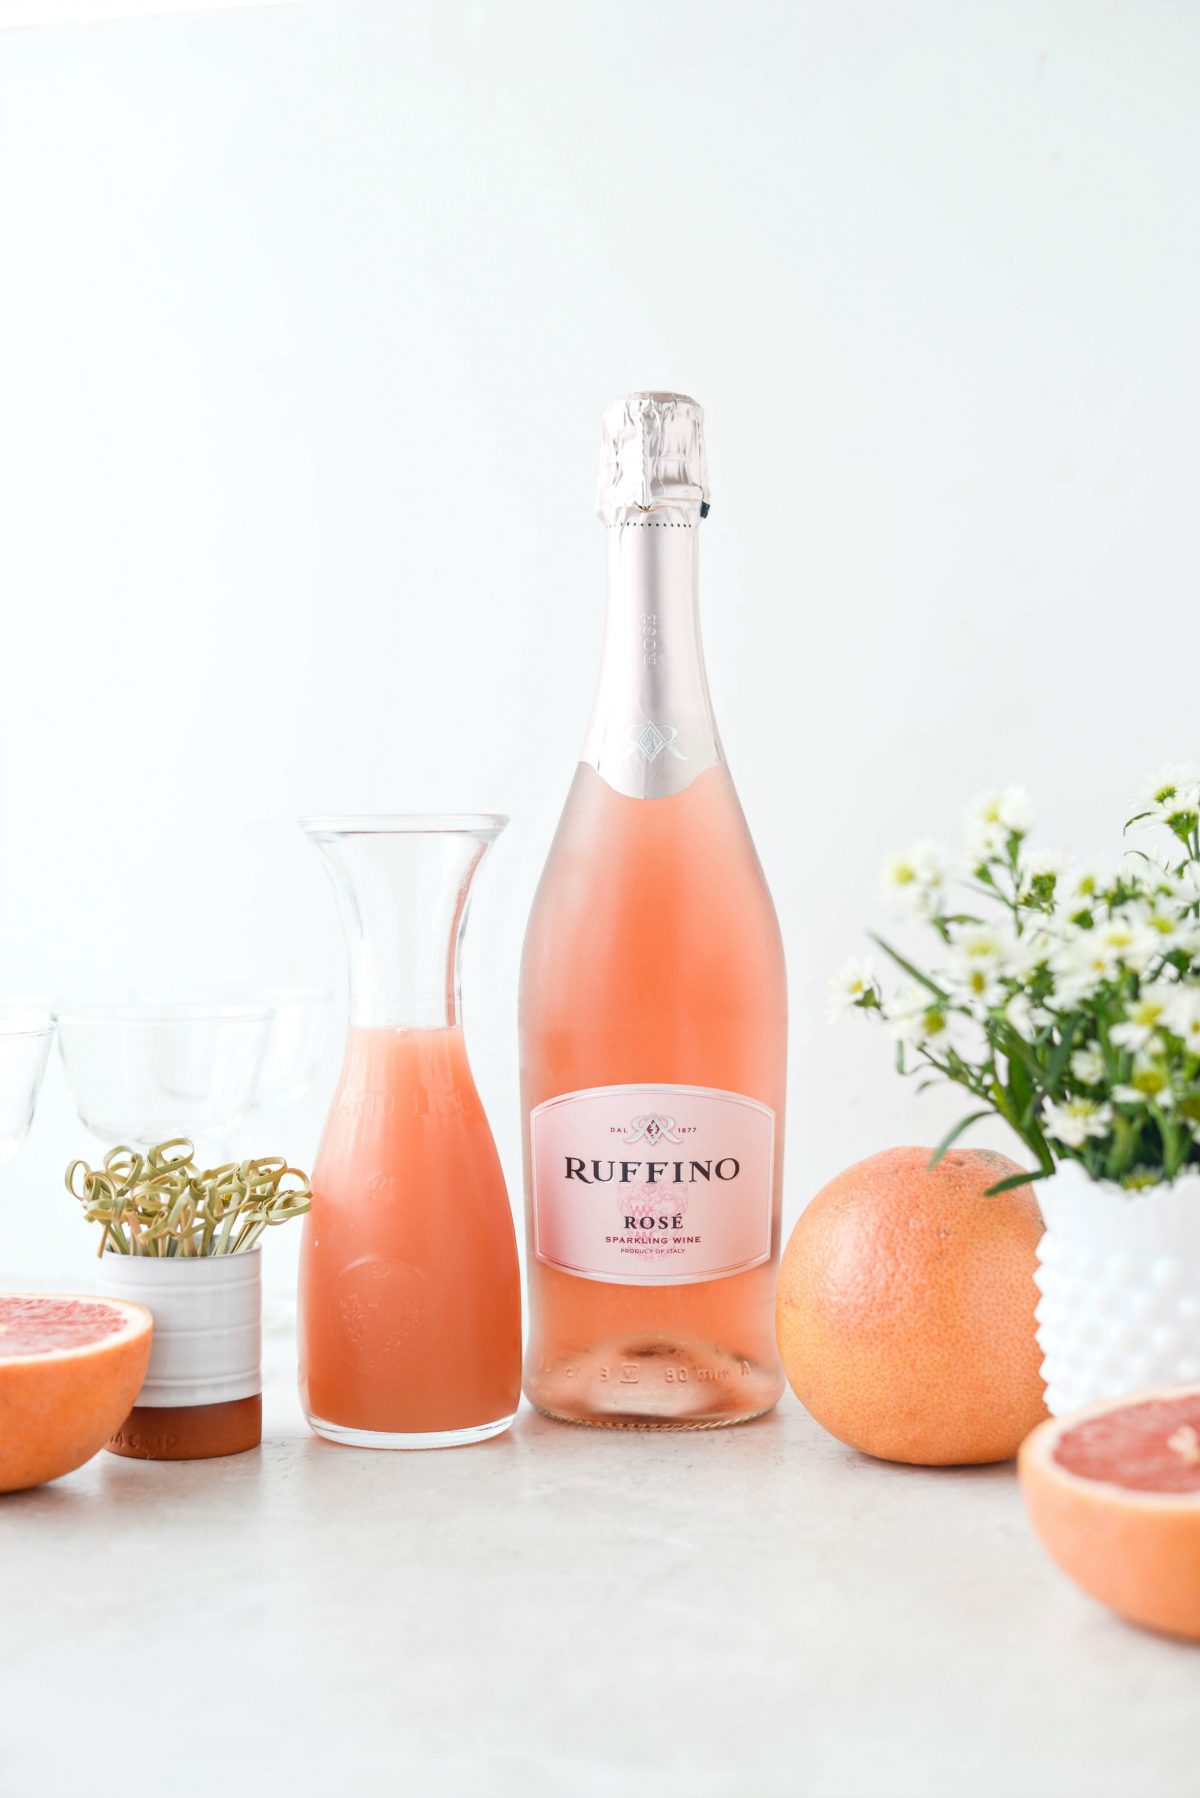  Grapefrukt Rosé Mimosas l SimplyScratch.com #voksen # drikke # grapefrukt # rose # mimosa # påske # brunsj # mothersday